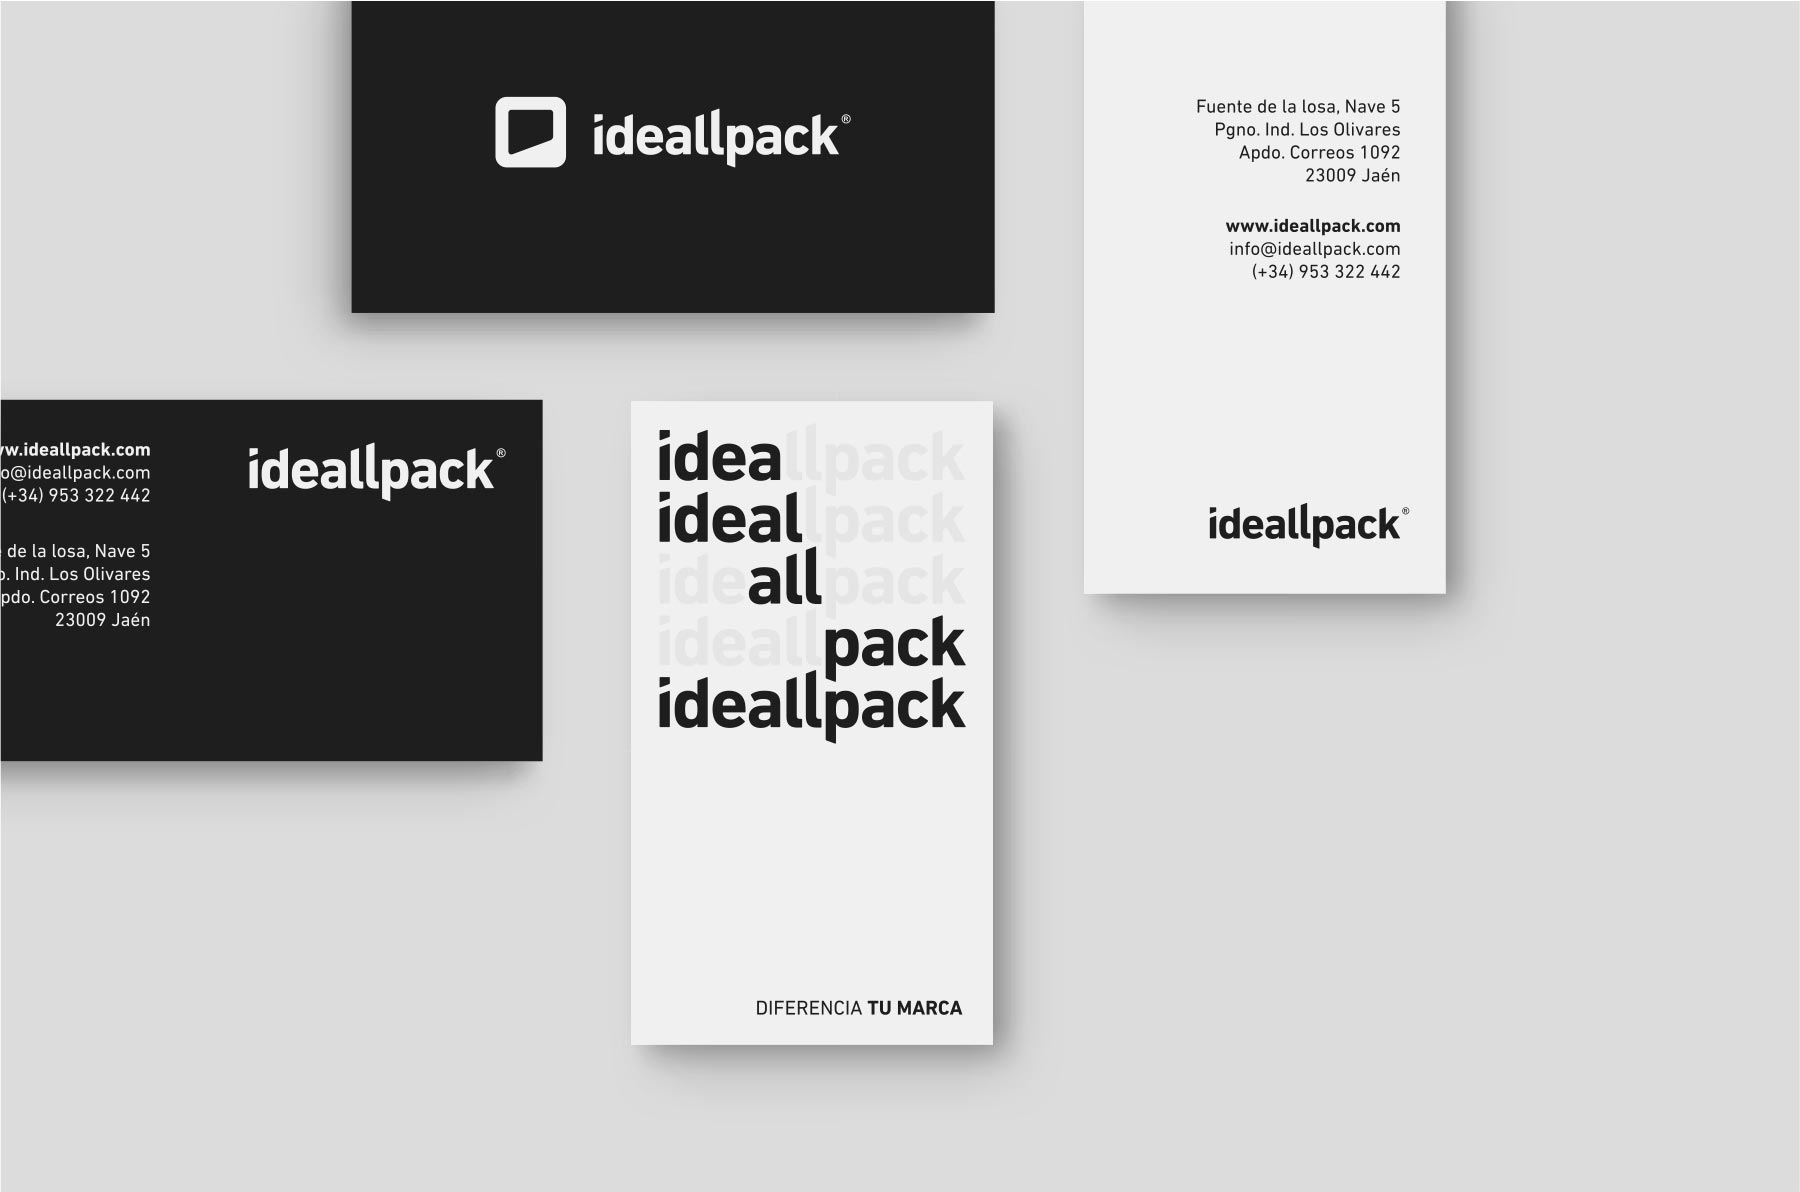 ideallpack tarjetas de presentacion - javier real